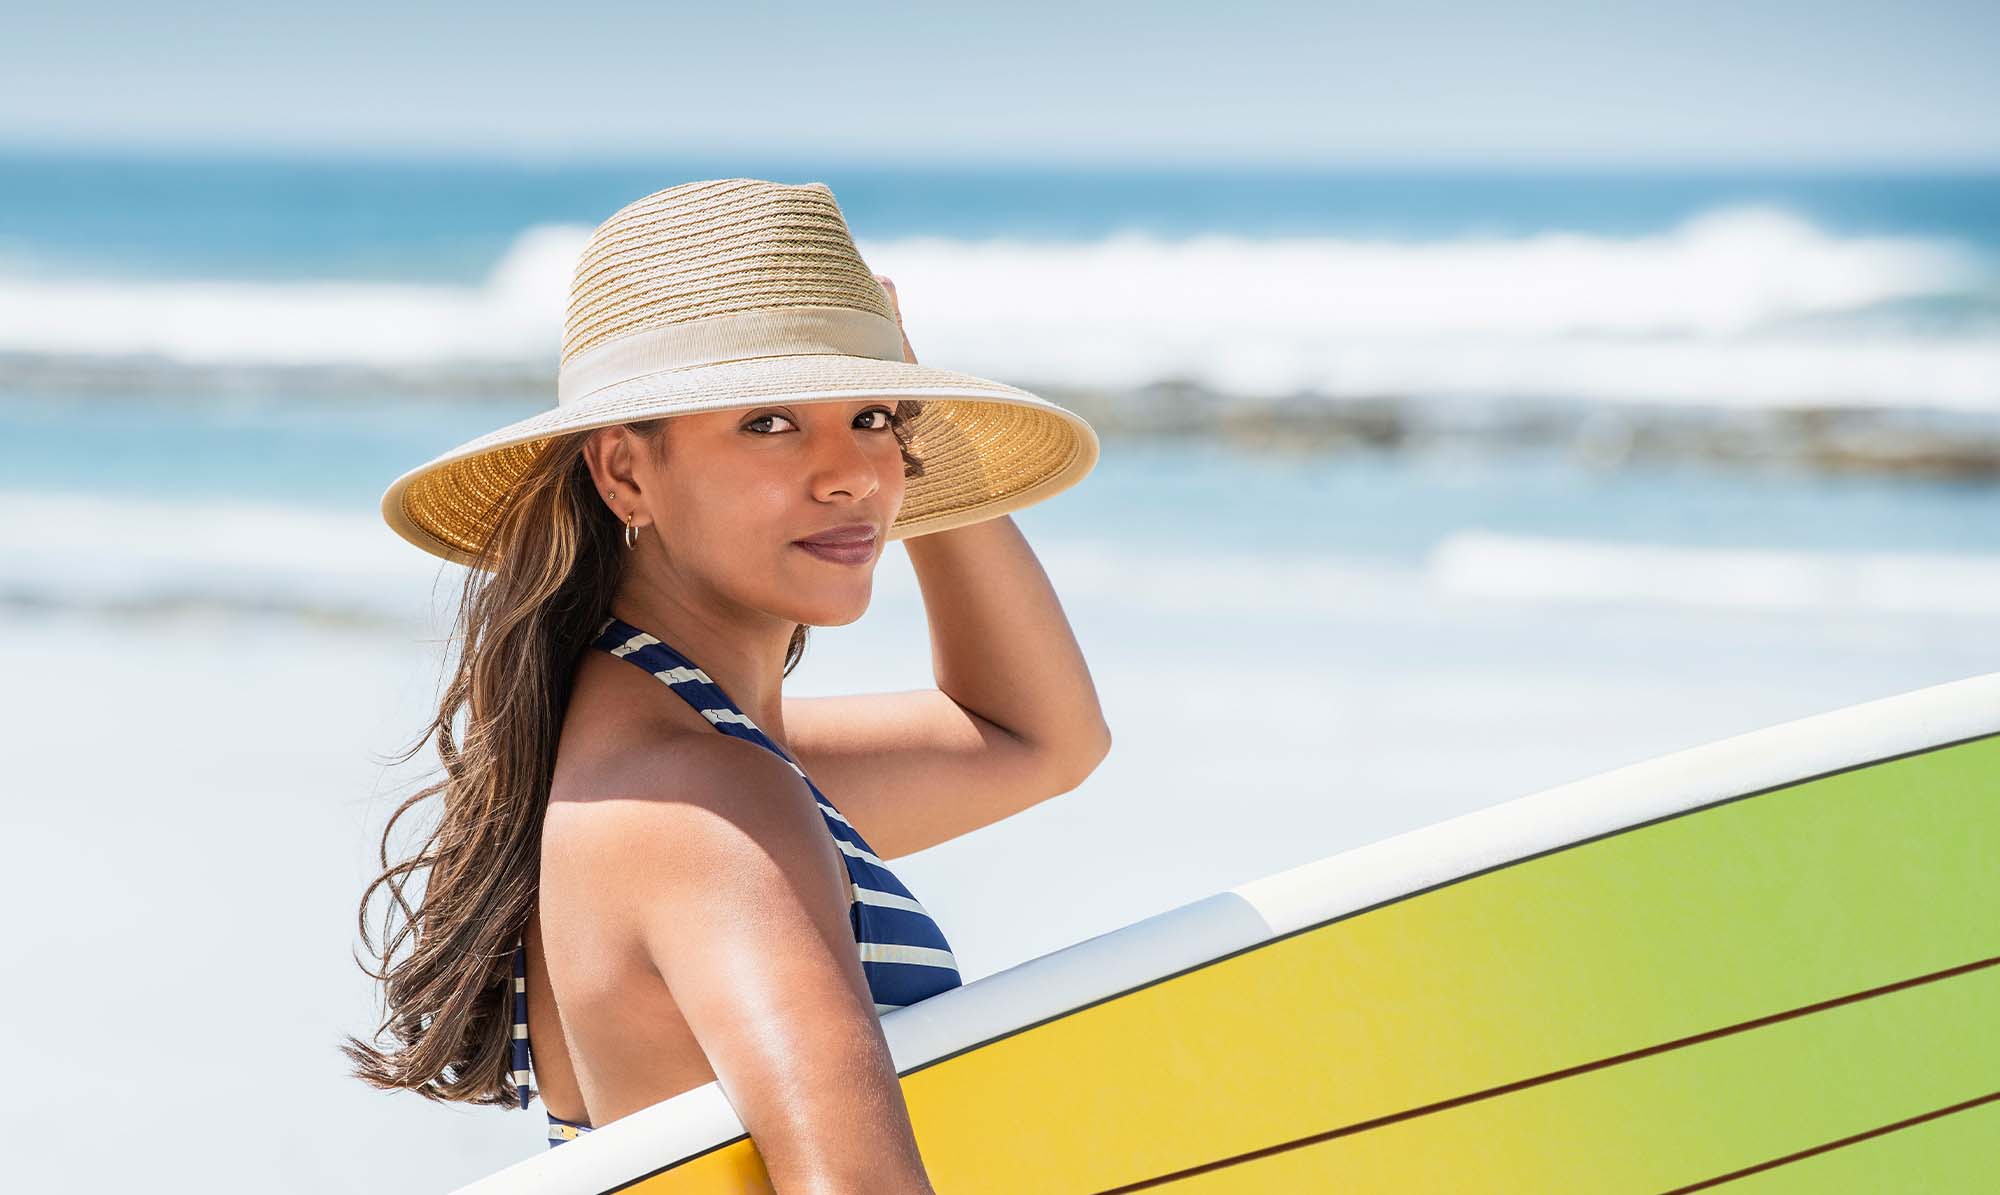 Woman with a Surfboard Wearing the Wallaroo Bali Beach Sun Hat with a big wide brim